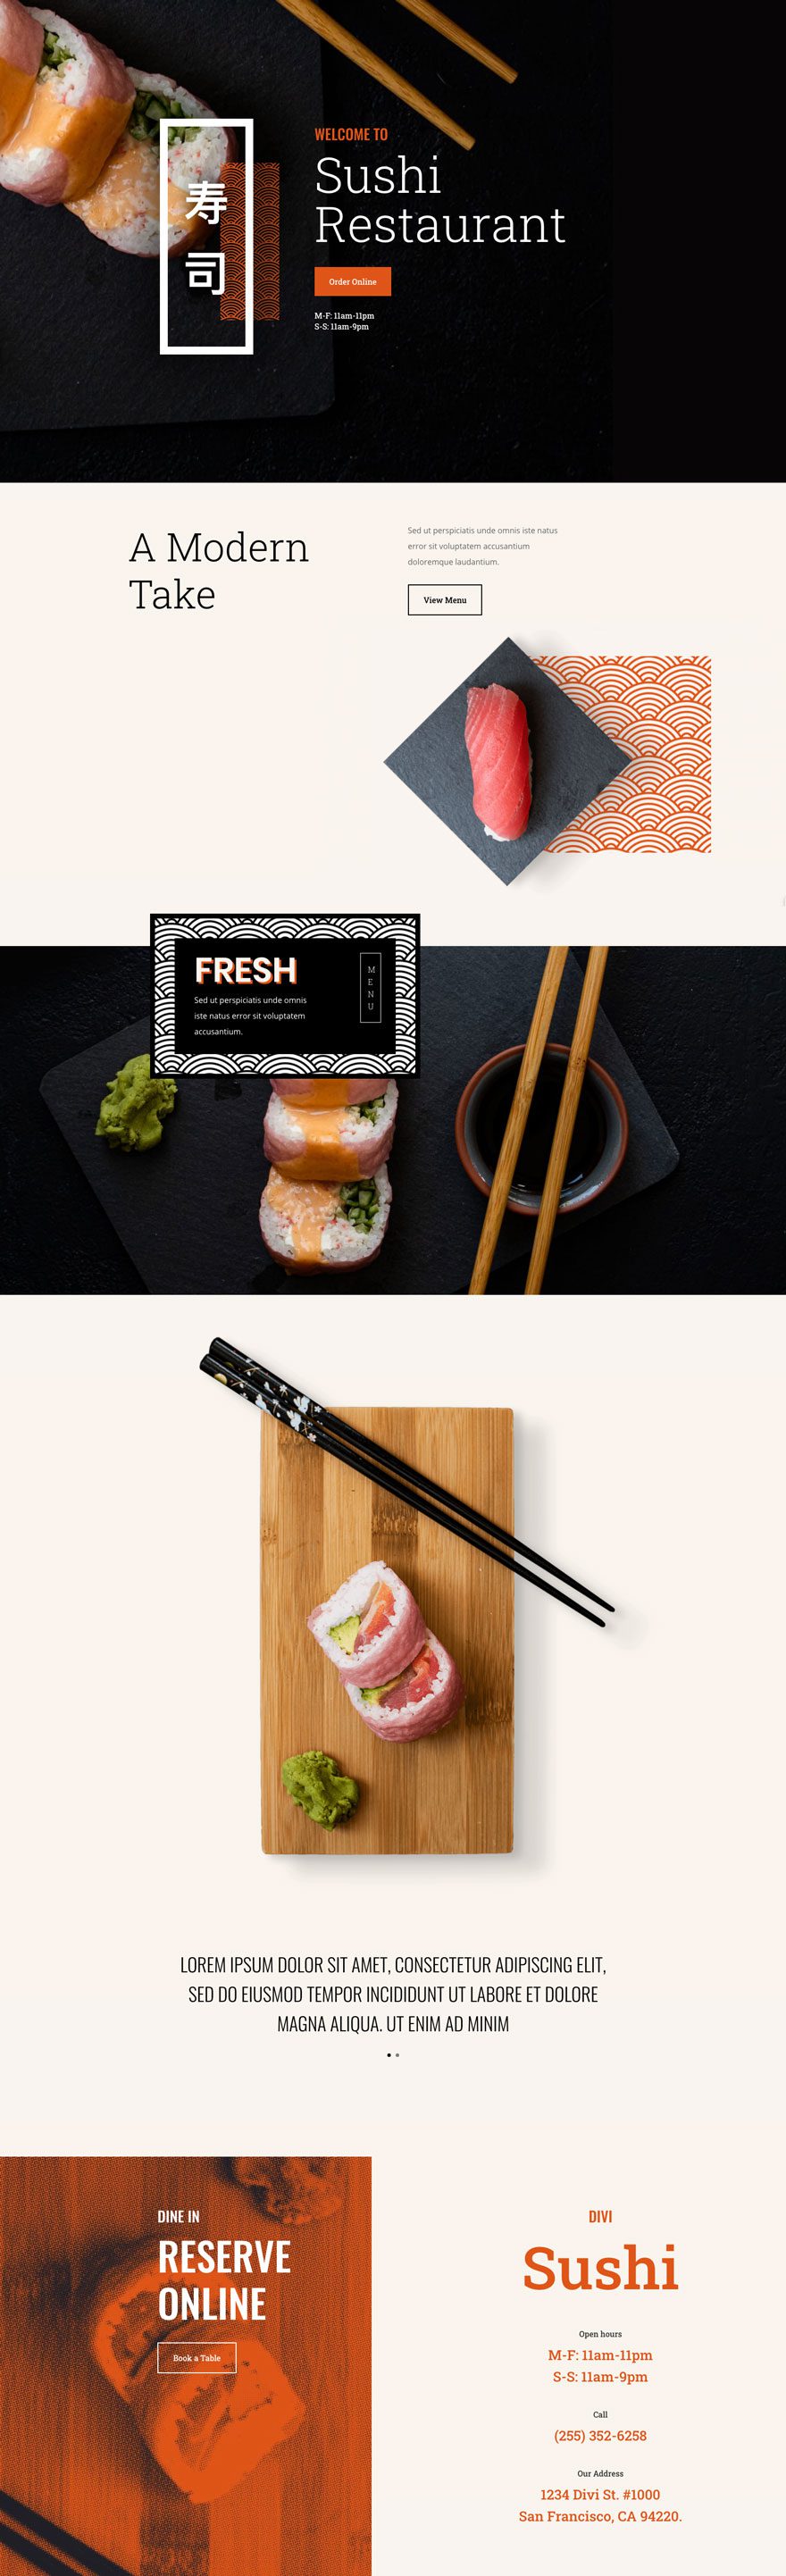 sushi restaurant